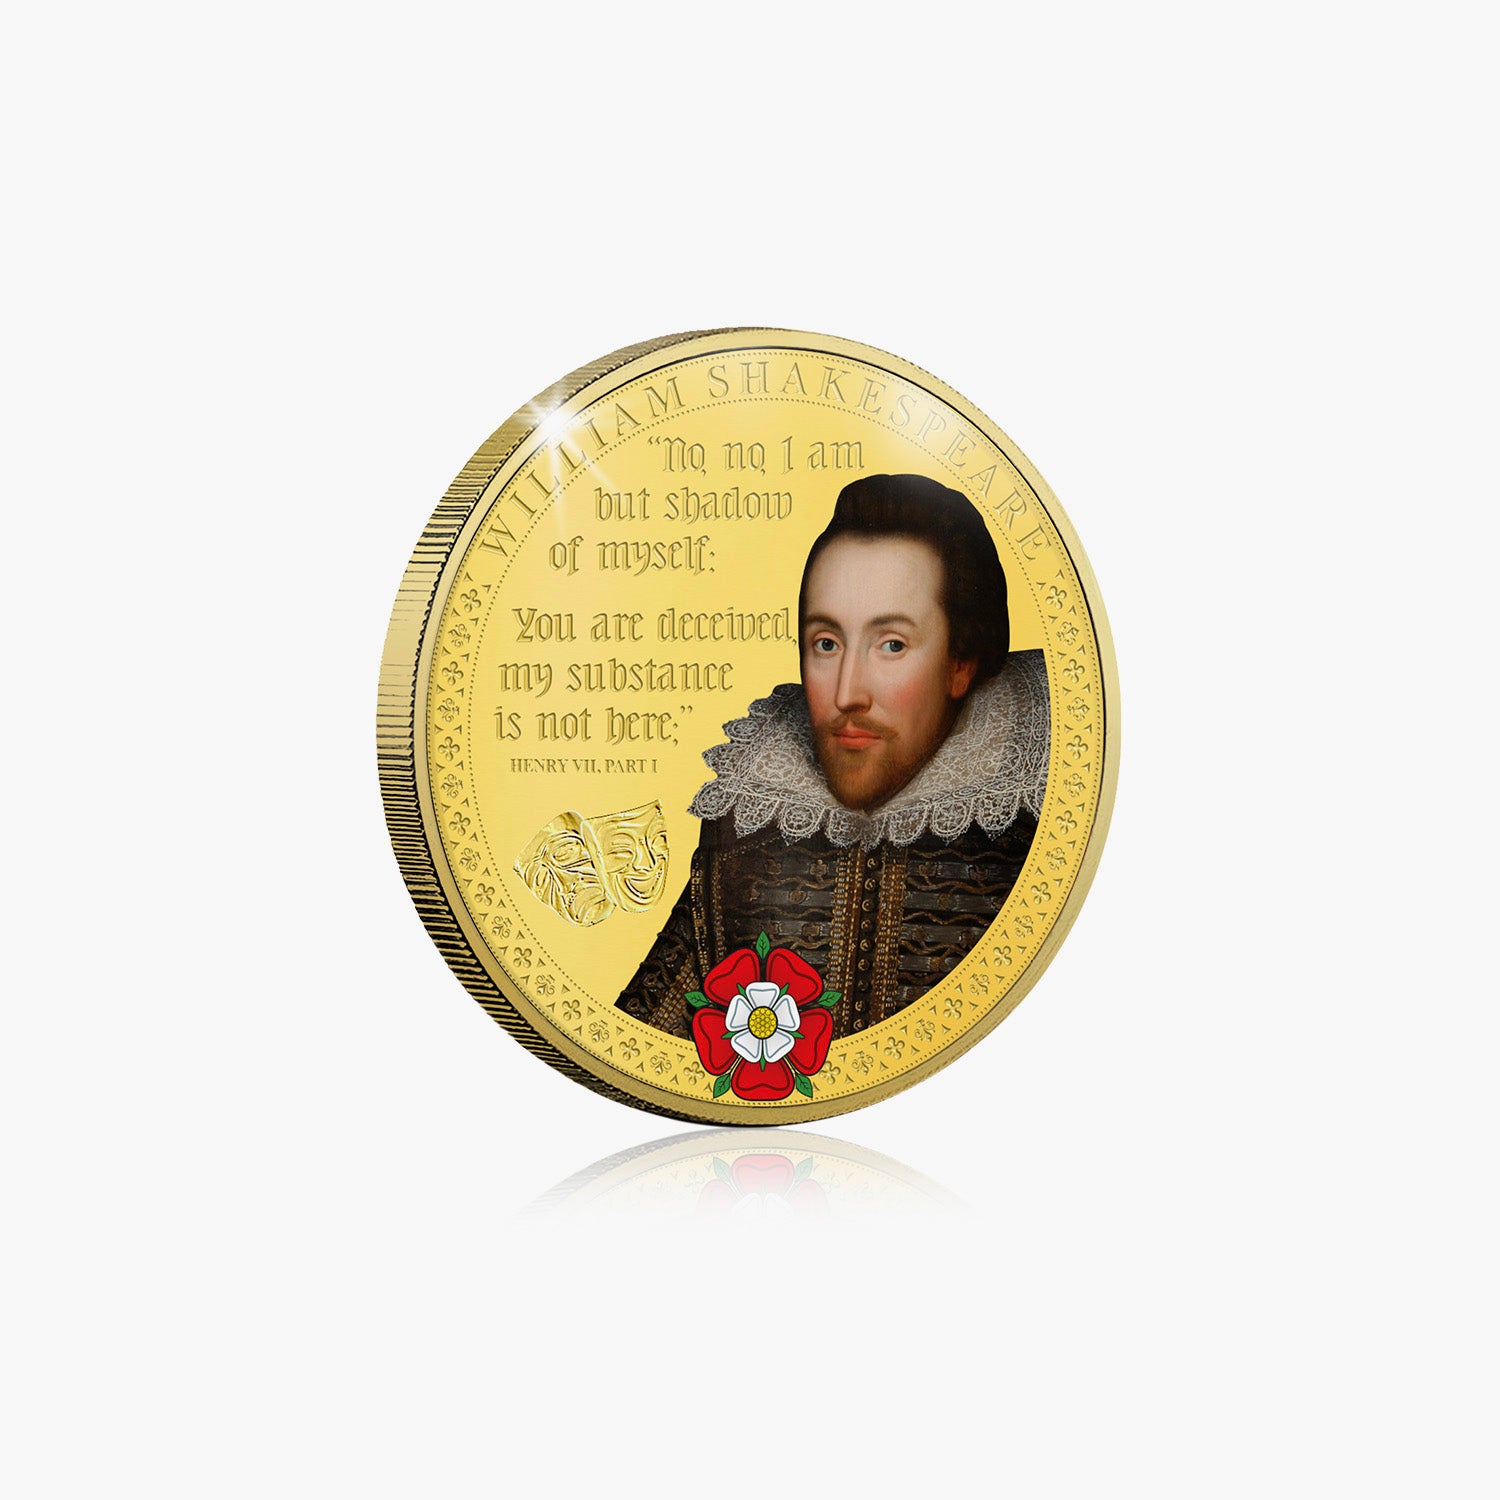 William Shakespeare Gold-Plated Commemorative